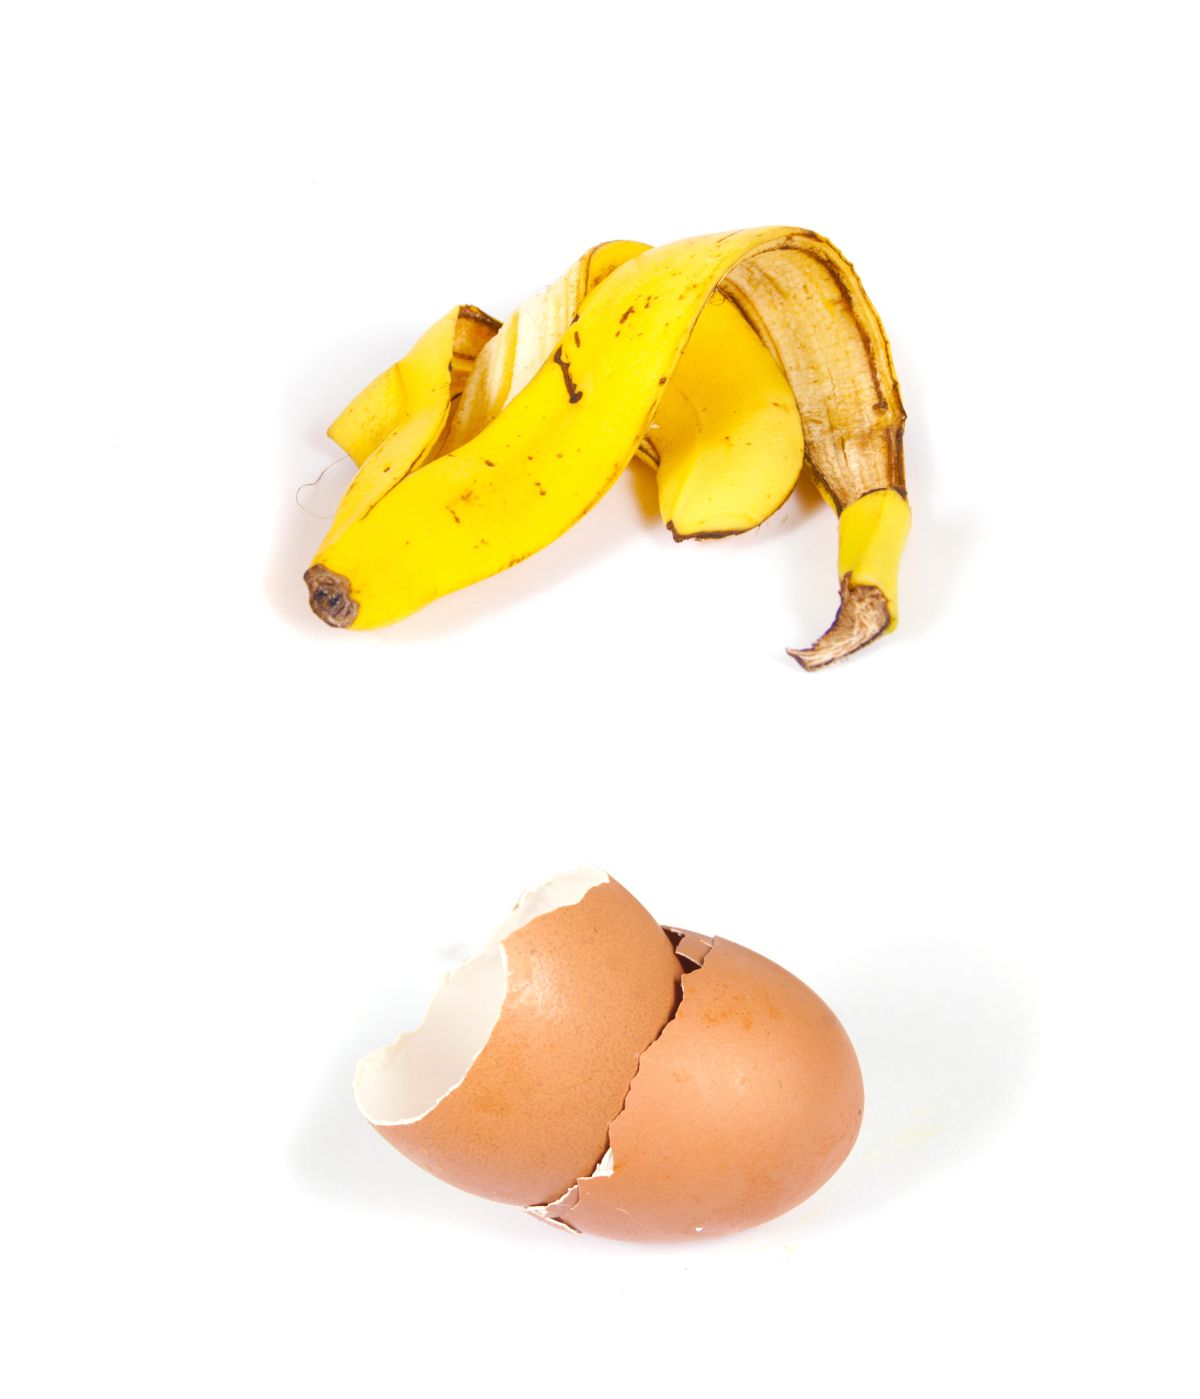 a banana skin and egg shells 